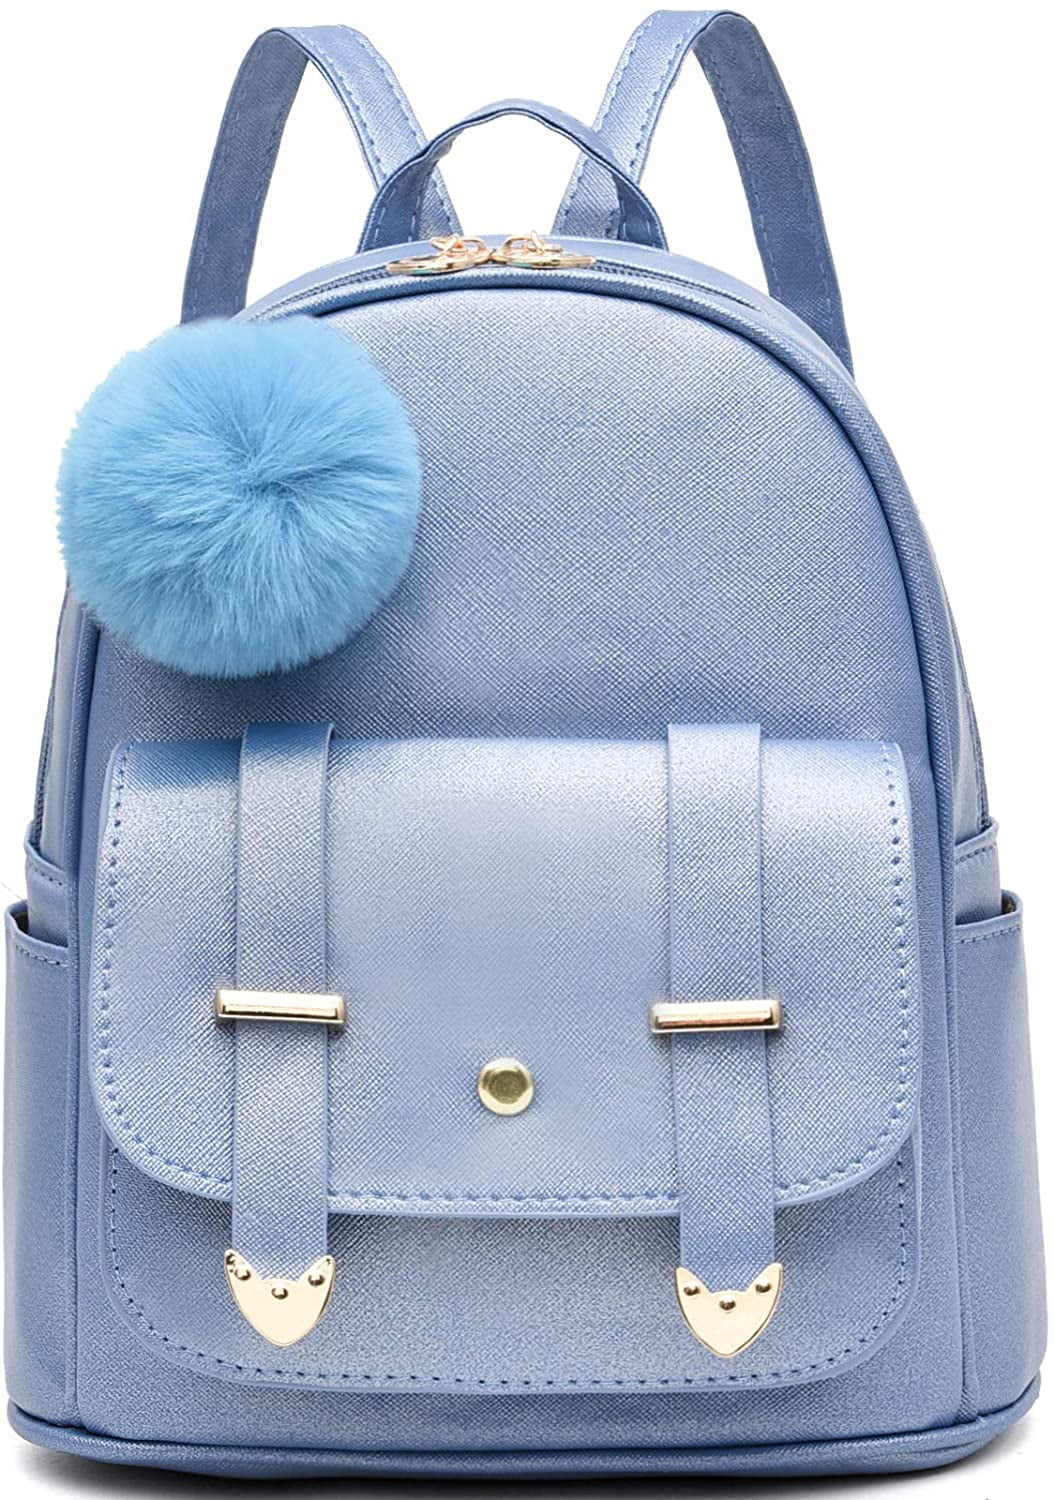 Girls pink pocket book little backpack womens handbag – The Lakewood Shop